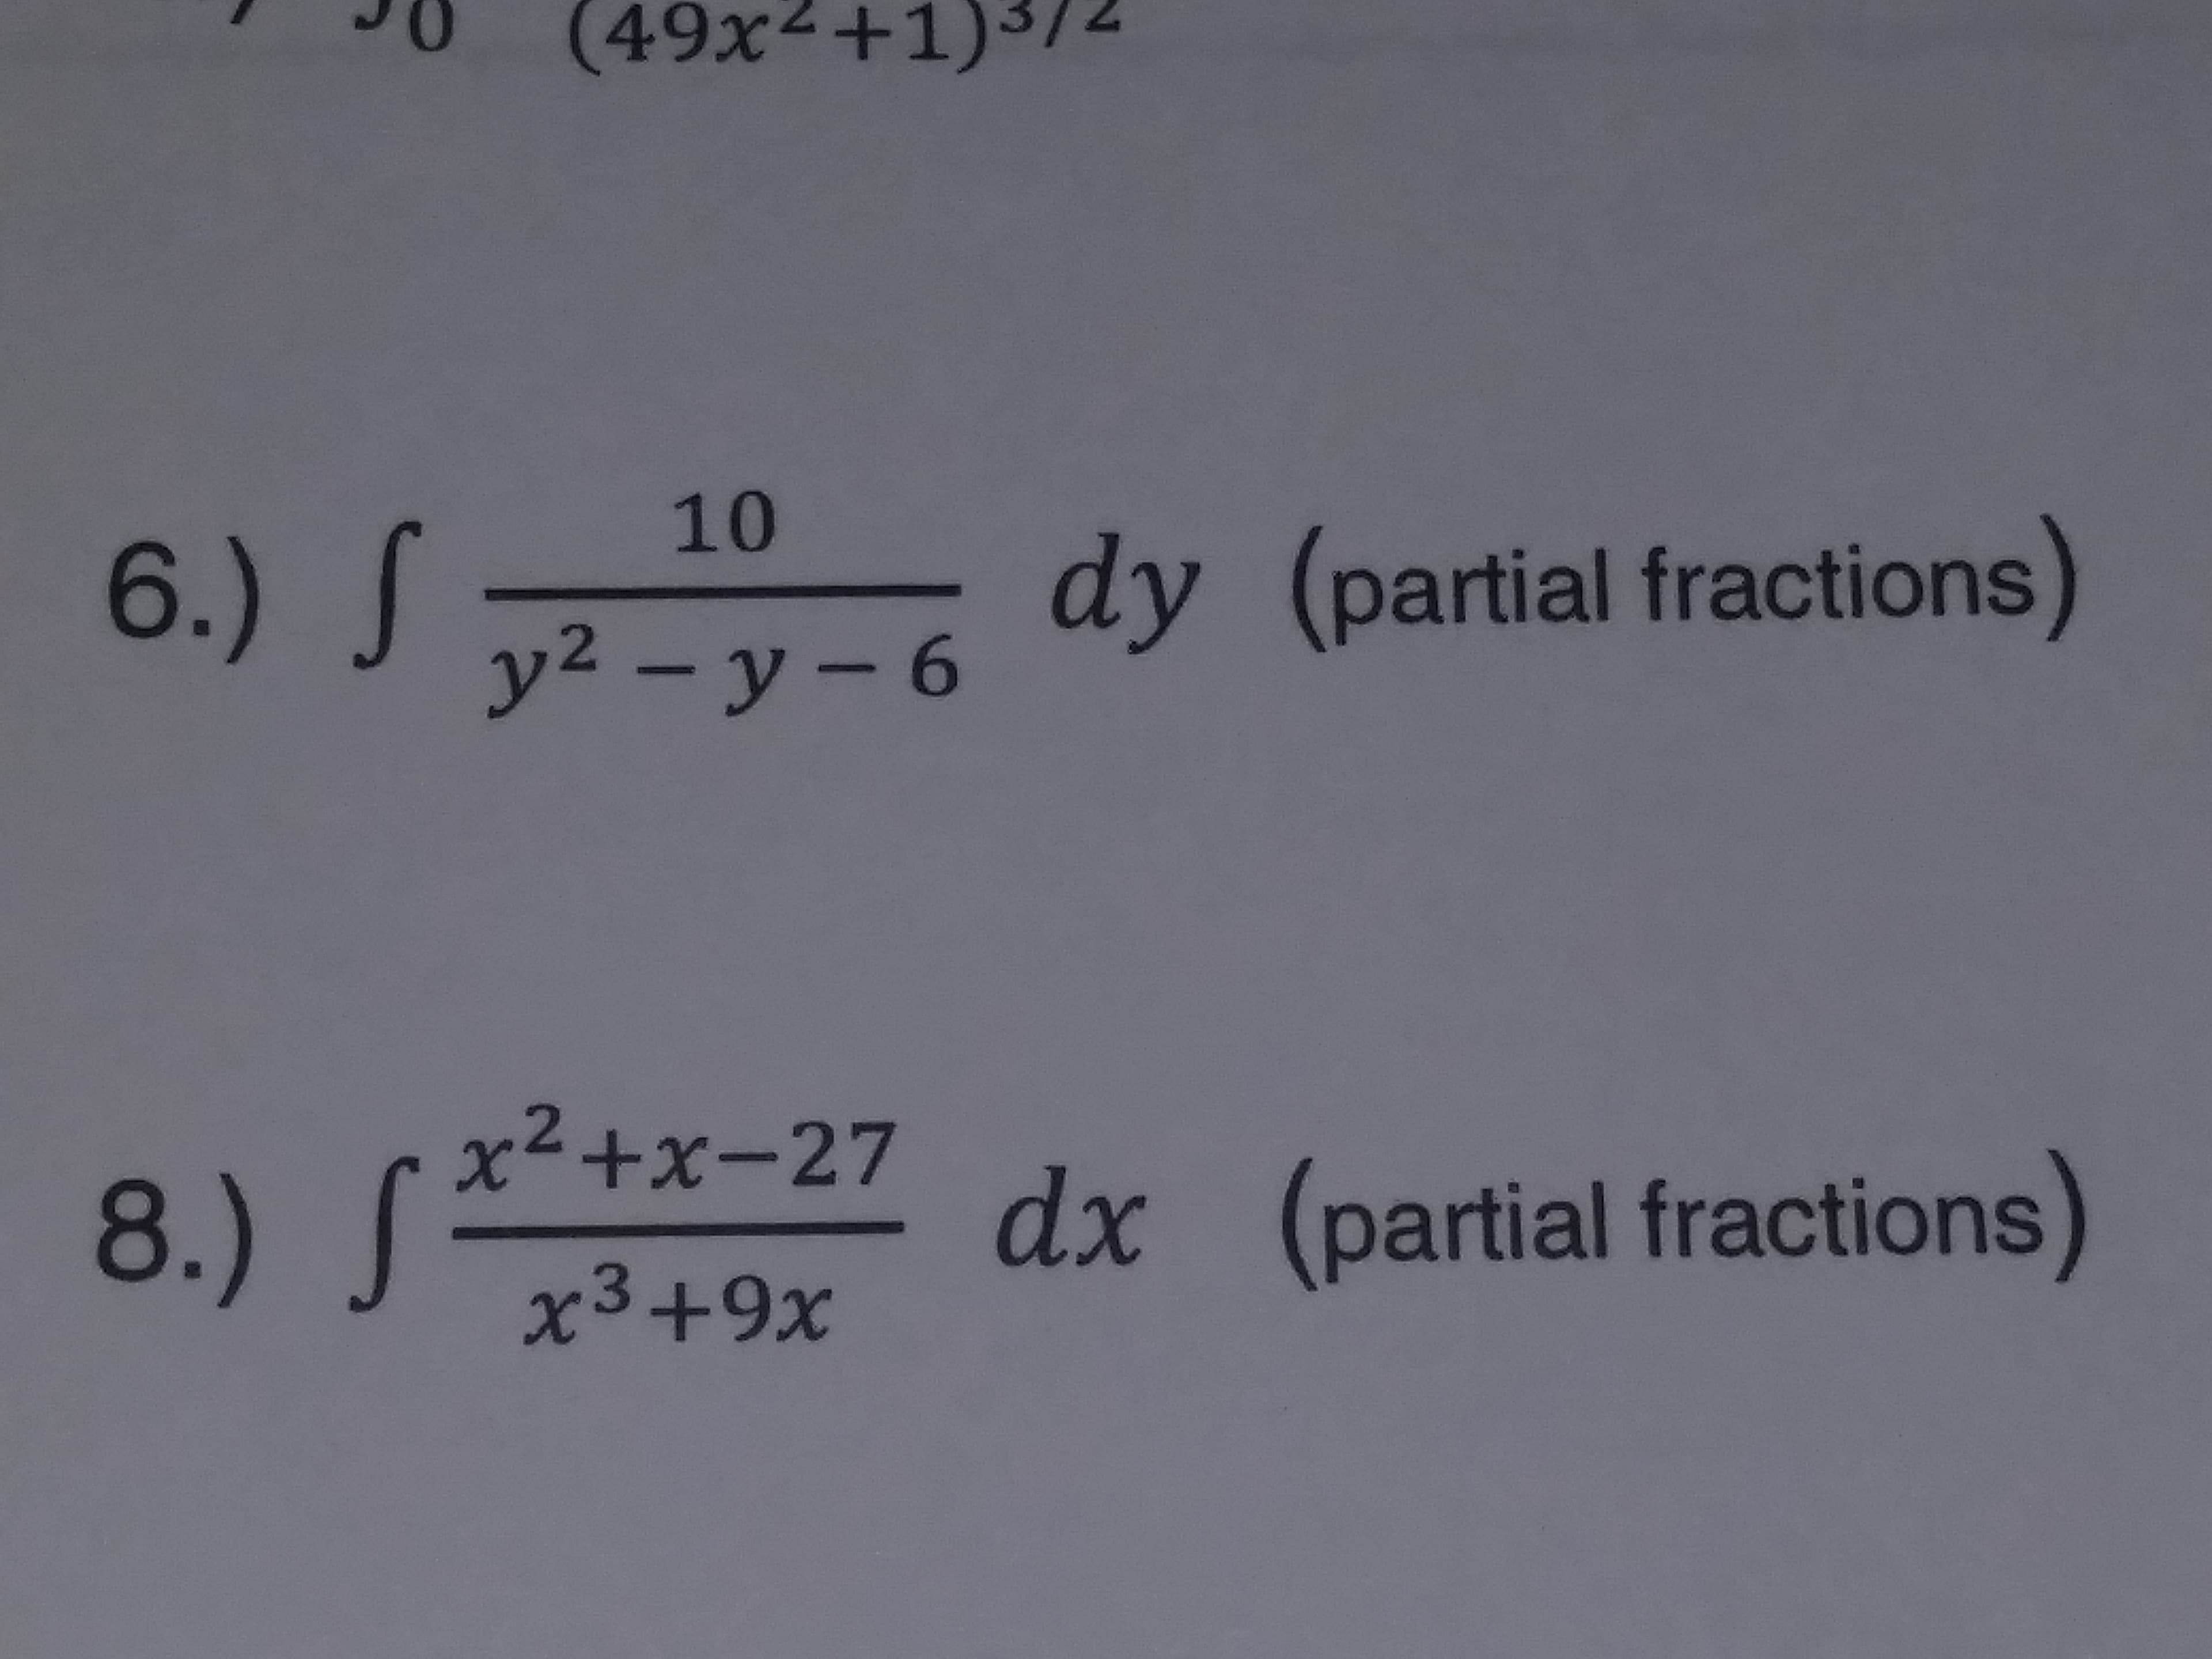 0 (49x +1)74
10
6
y (partial fractions
x2 +x-27
dx (partial fractions)
